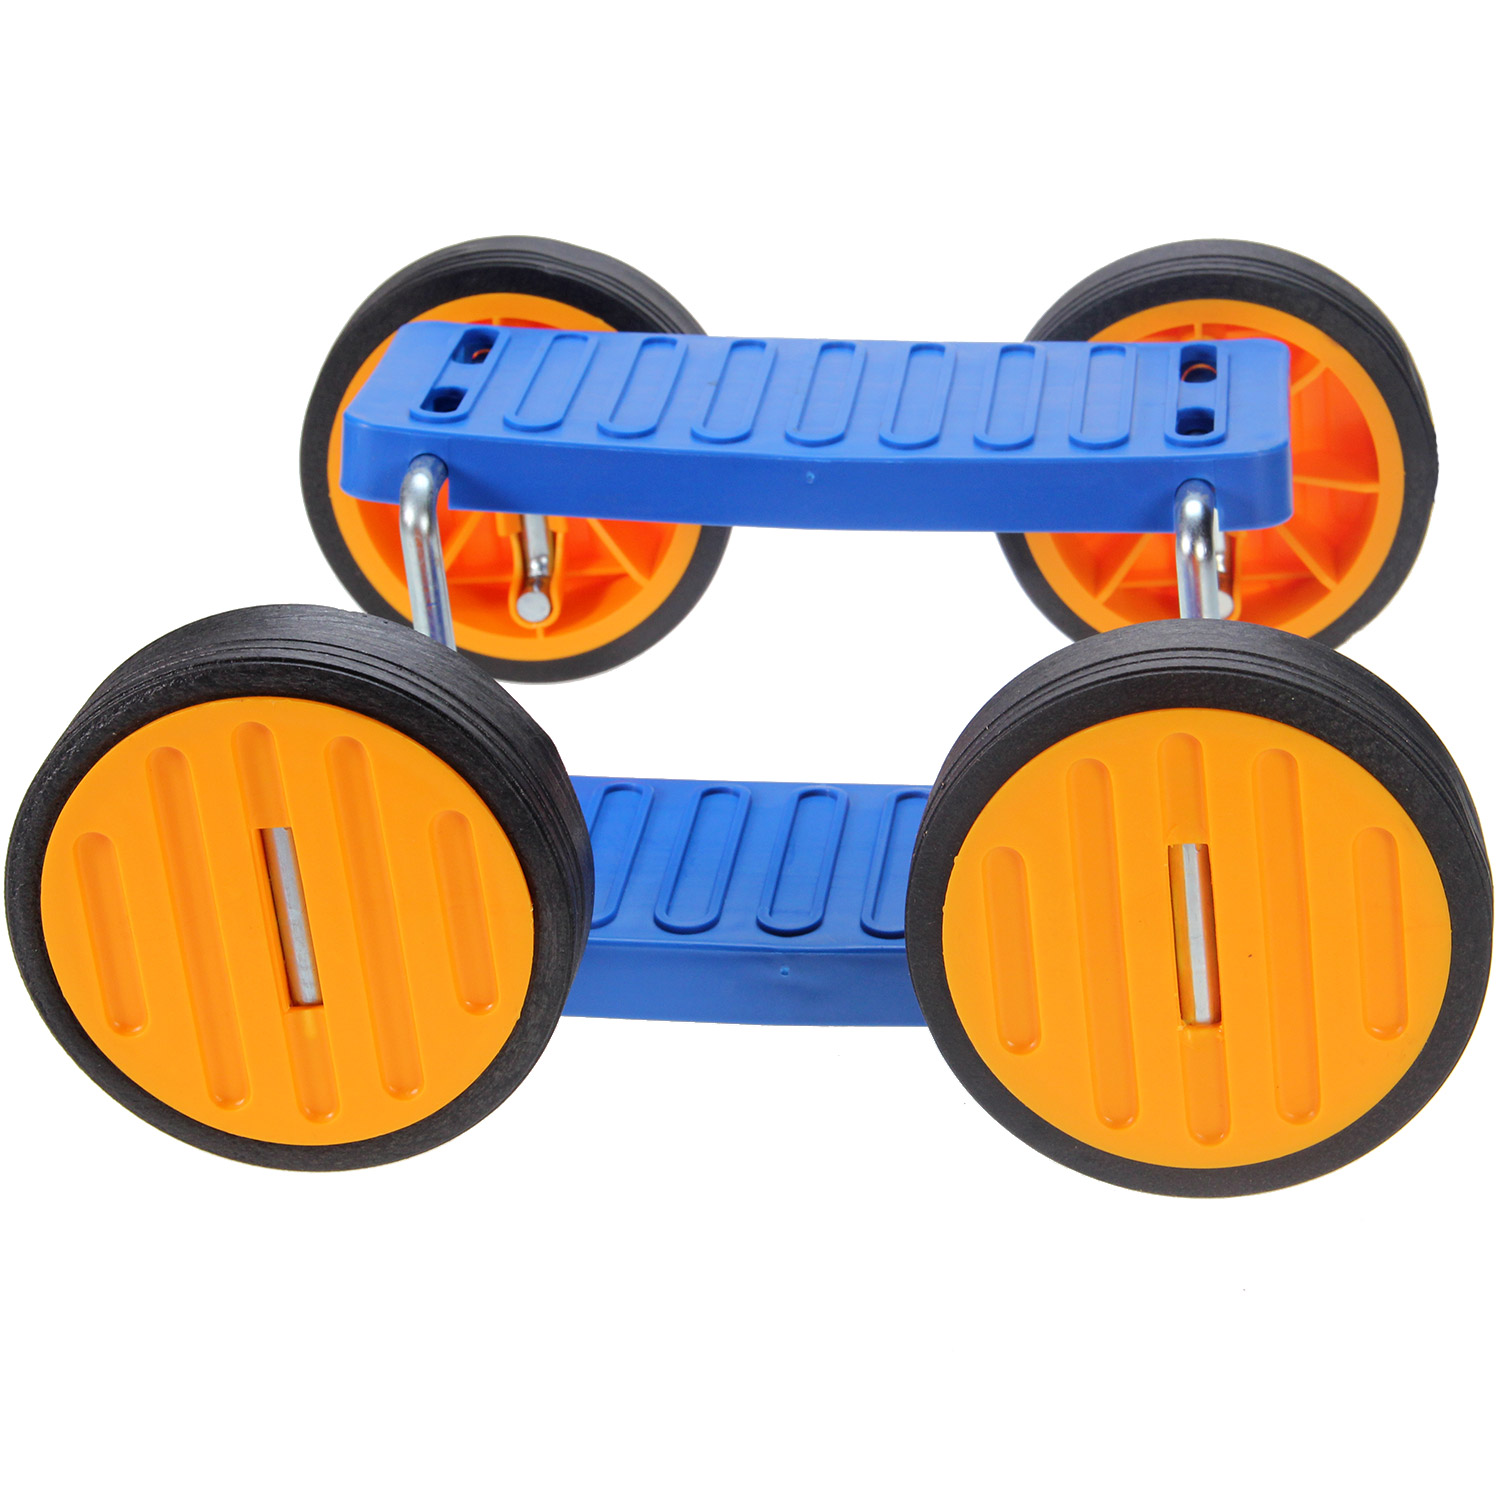 Acrobatique pedal go bleu